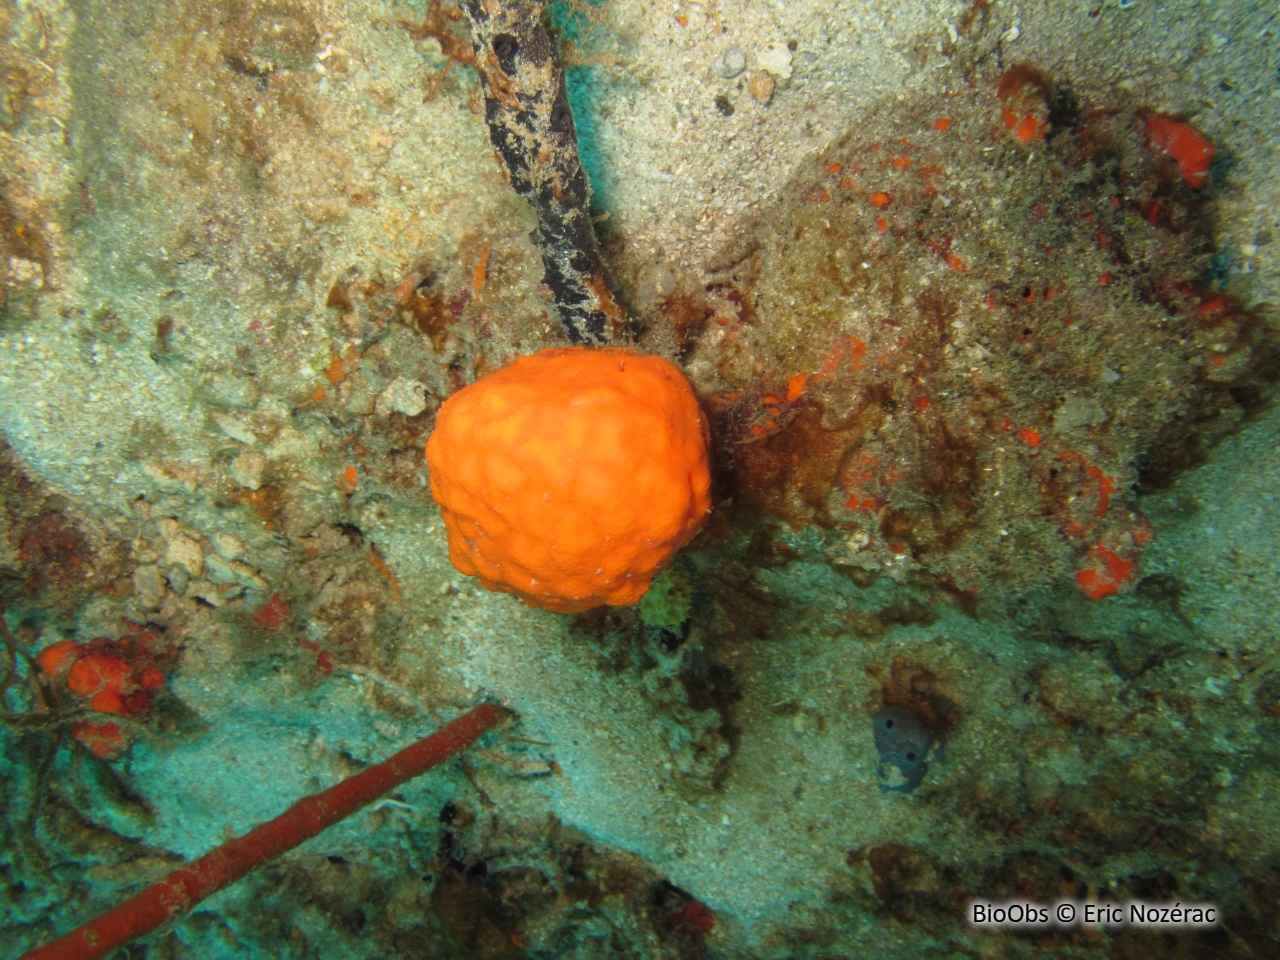 Eponge boule orange - Cinachyrella kuekenthali - Eric Nozérac - BioObs